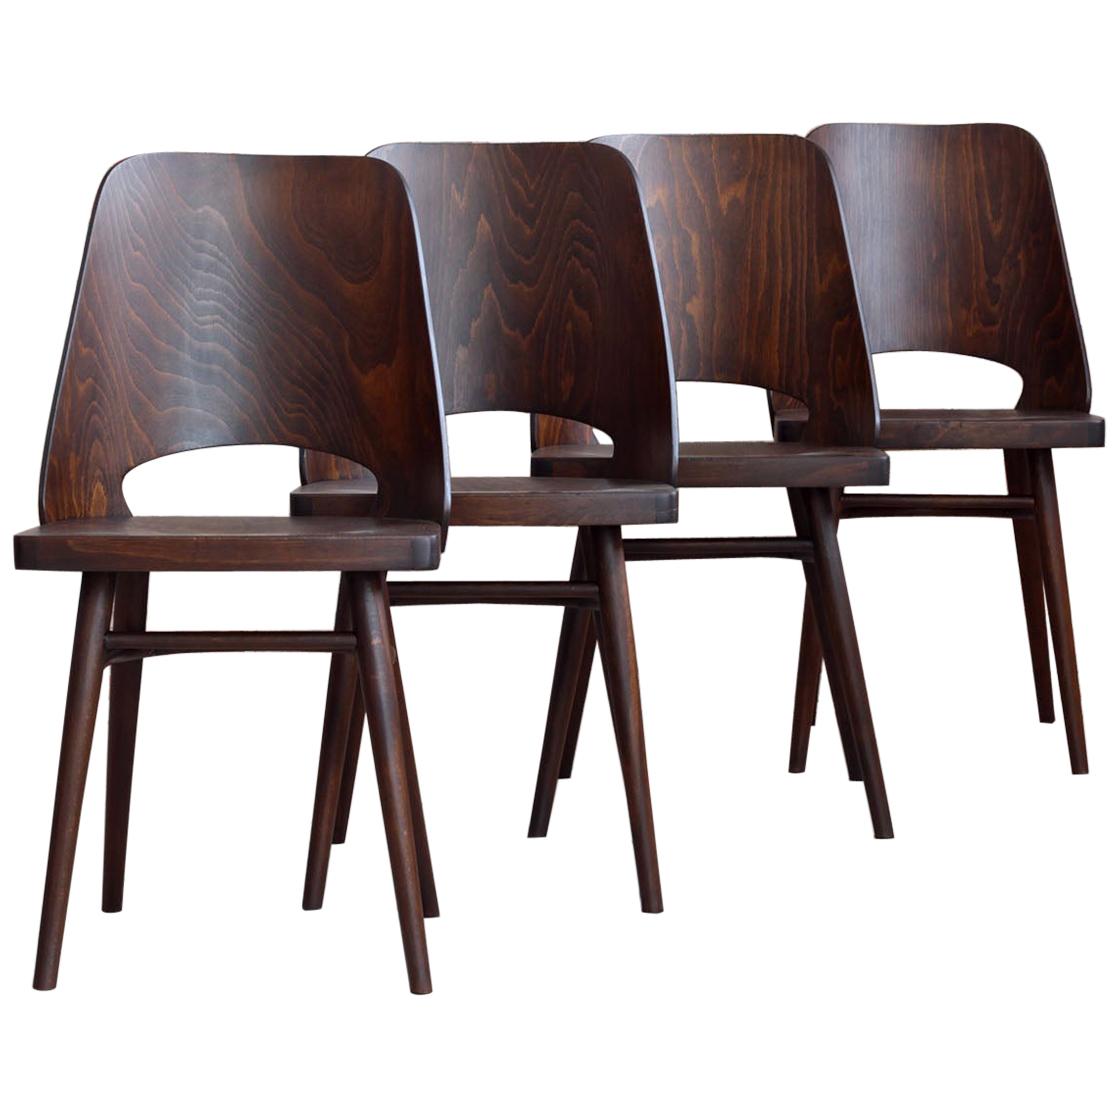 Set of 4 Chairs by Oswald Haerdtl, Beech Veneer, Oil Finish